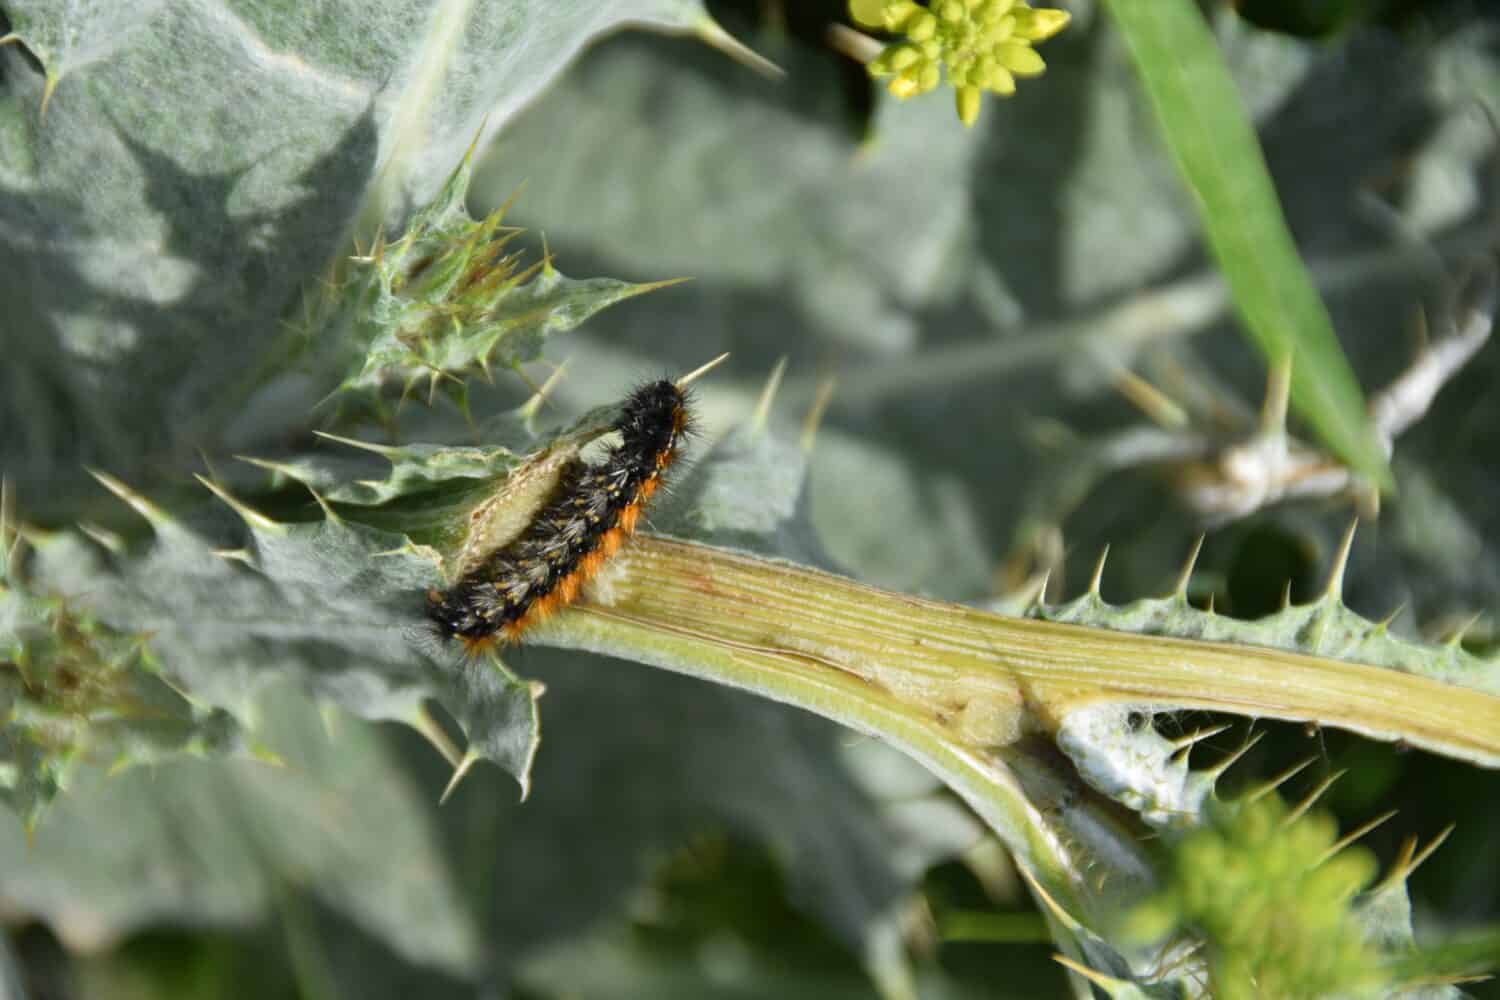 Caterpillar of a thistle moth on a thistle, near Amman, Jordan